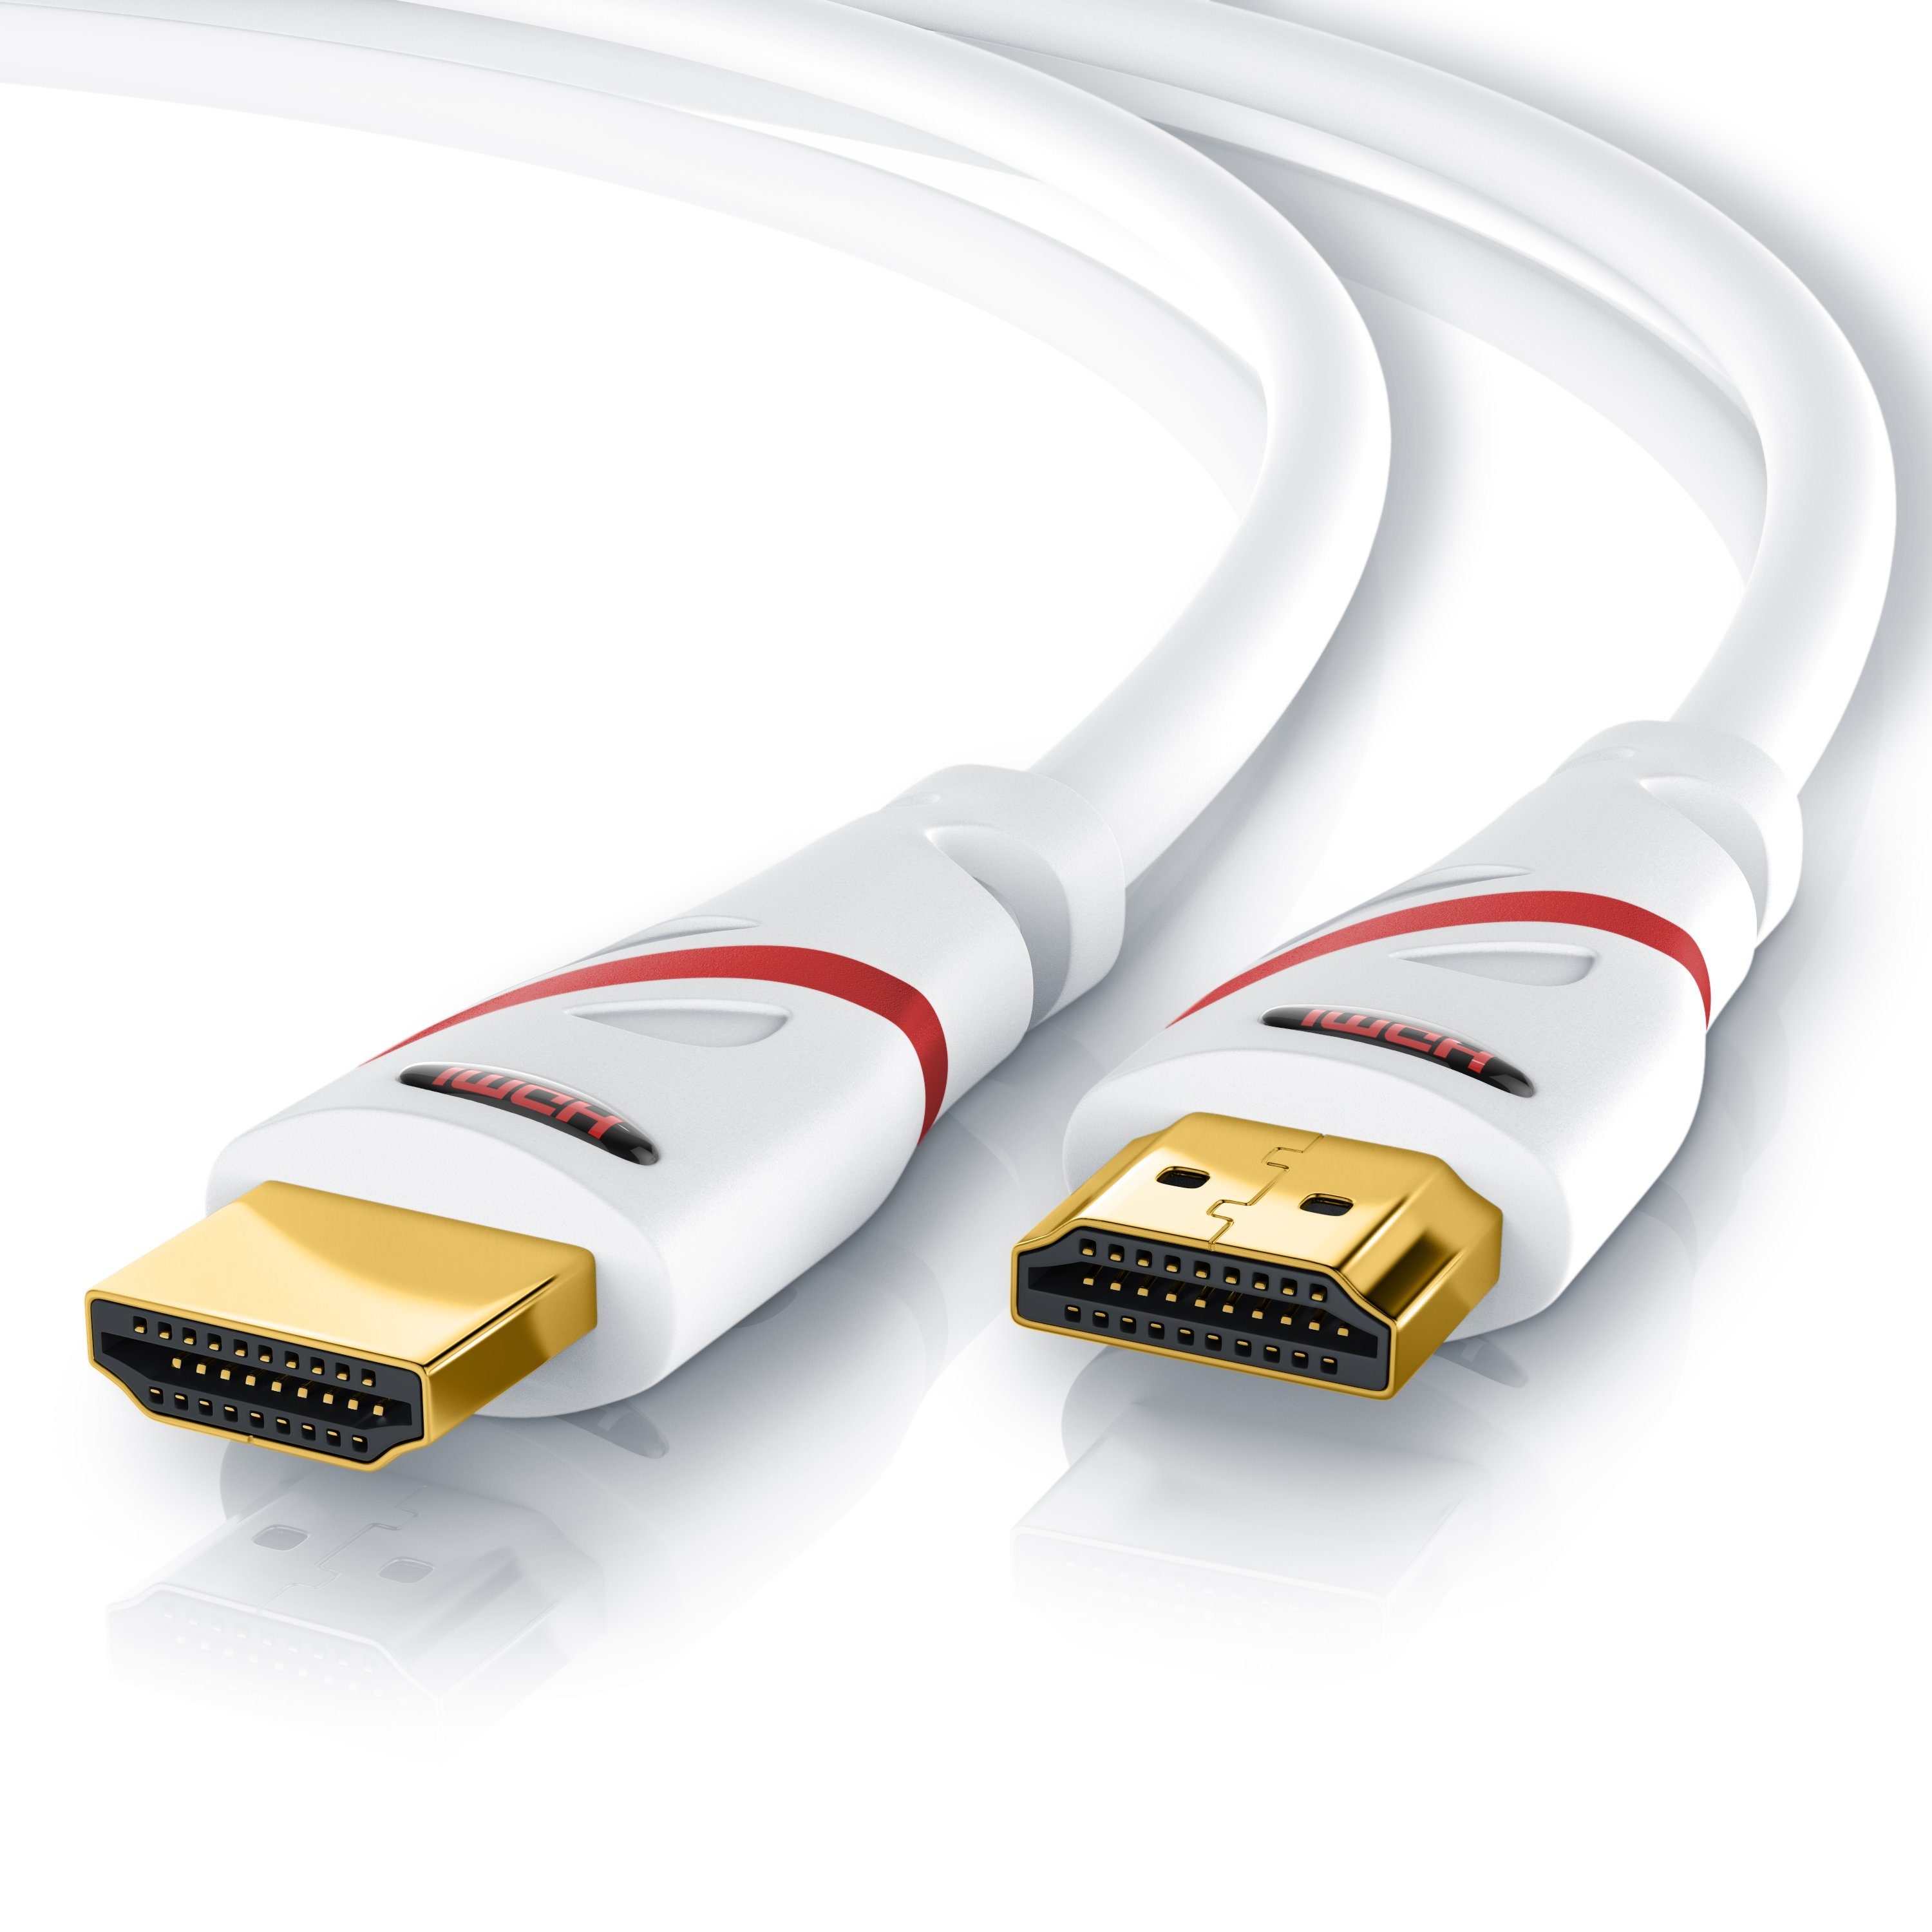 CSL HDMI-Kabel, 2.0b, HDMI Typ A (750 cm), 4K Ultra HD, UHD, Full HD, 3D, ARC, High Speed mit Ethernet - 7,5m